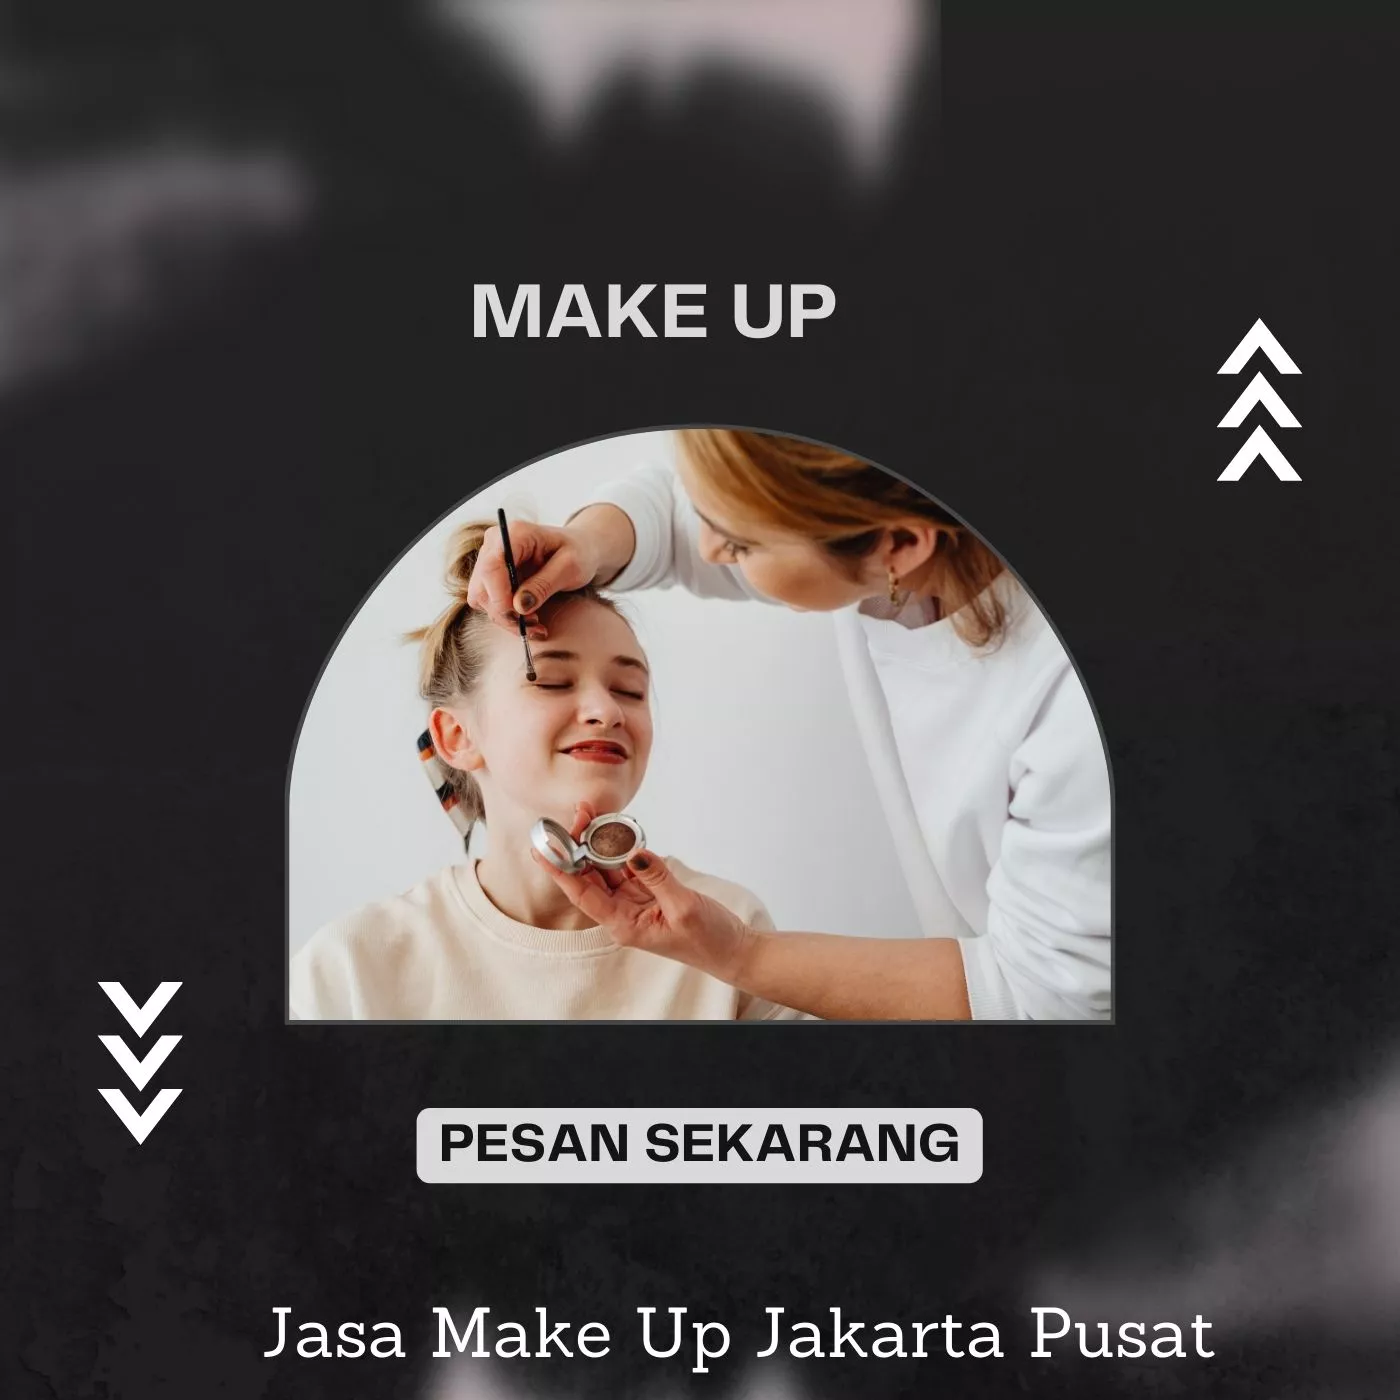 Jasa Make Up Jakarta Pusat 